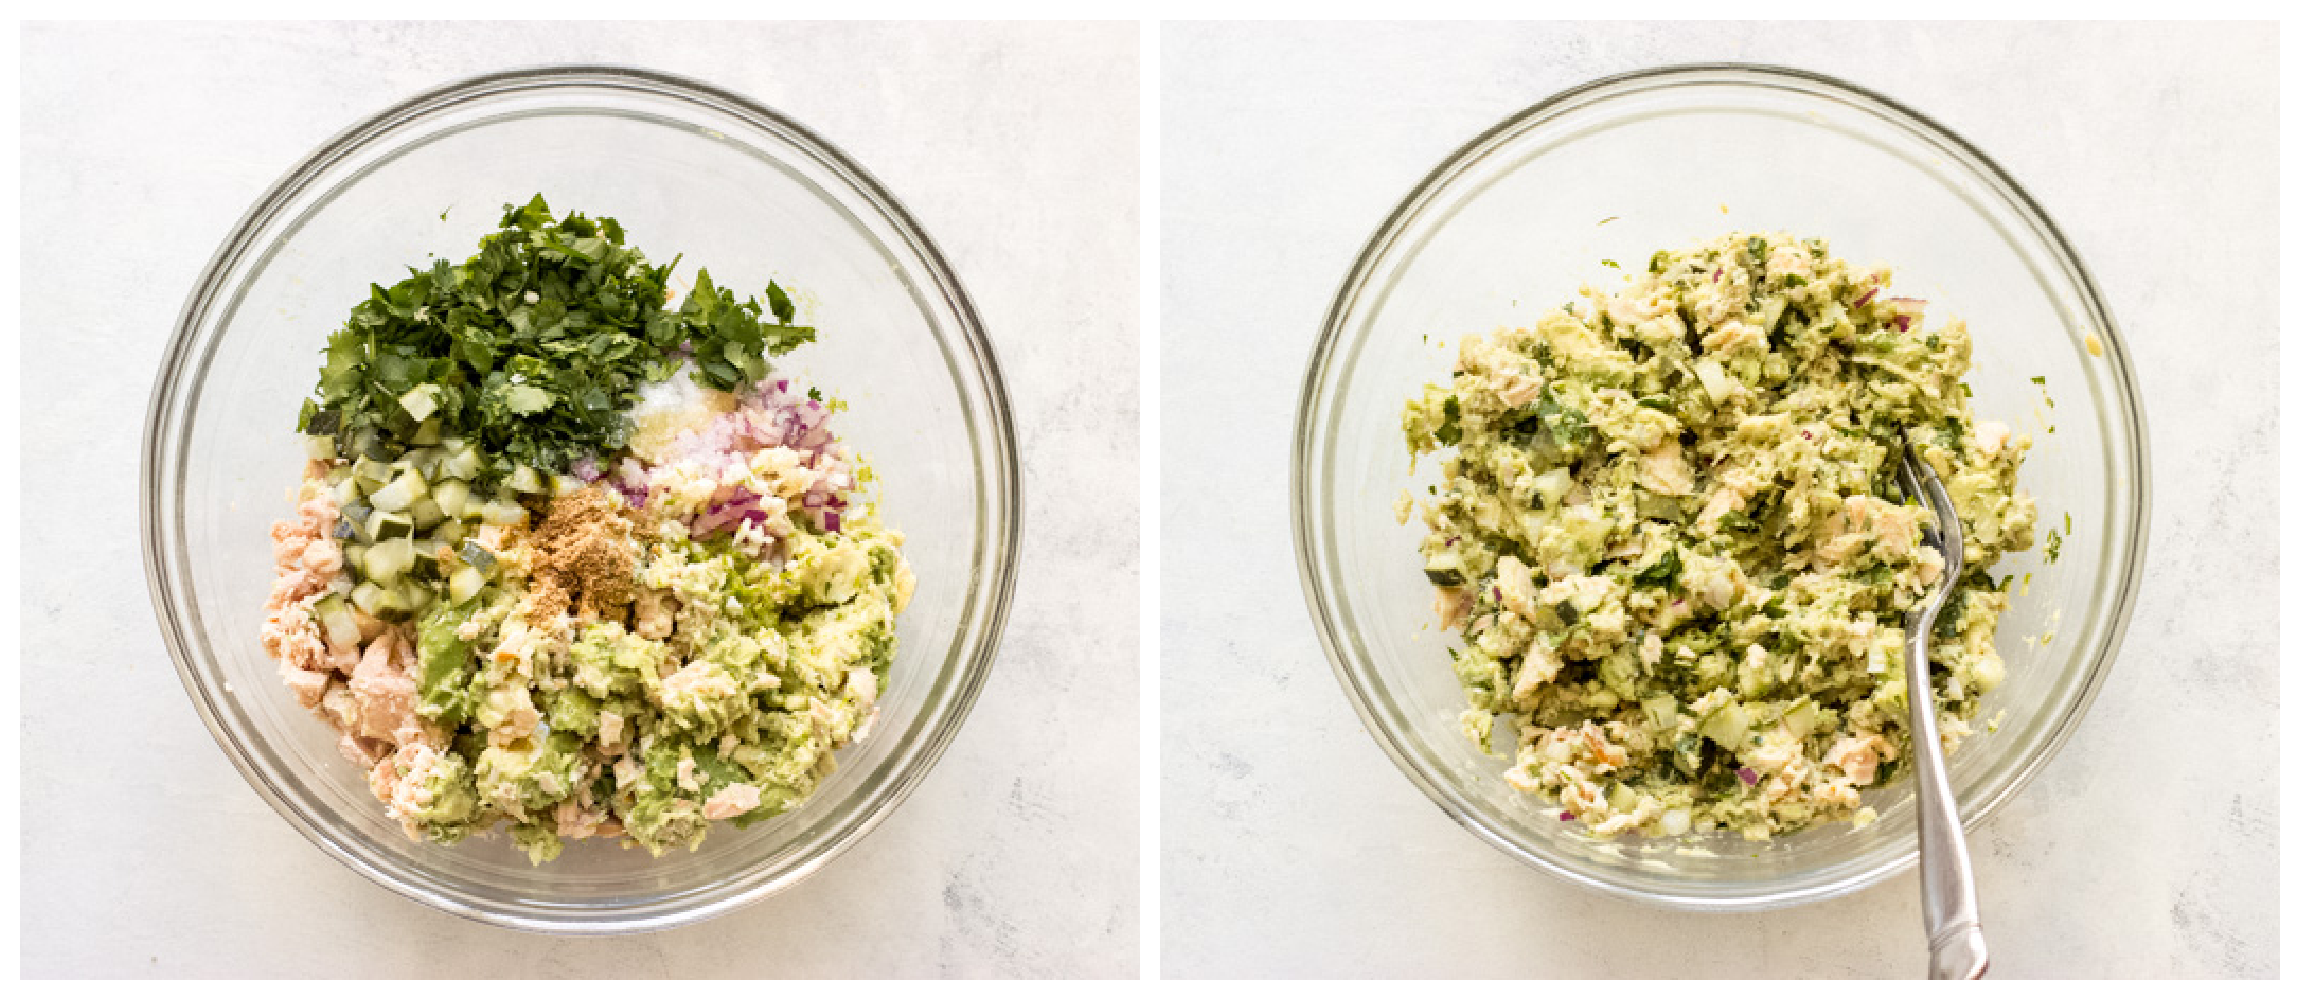 creamy avocado tuna salad in a glass bowl